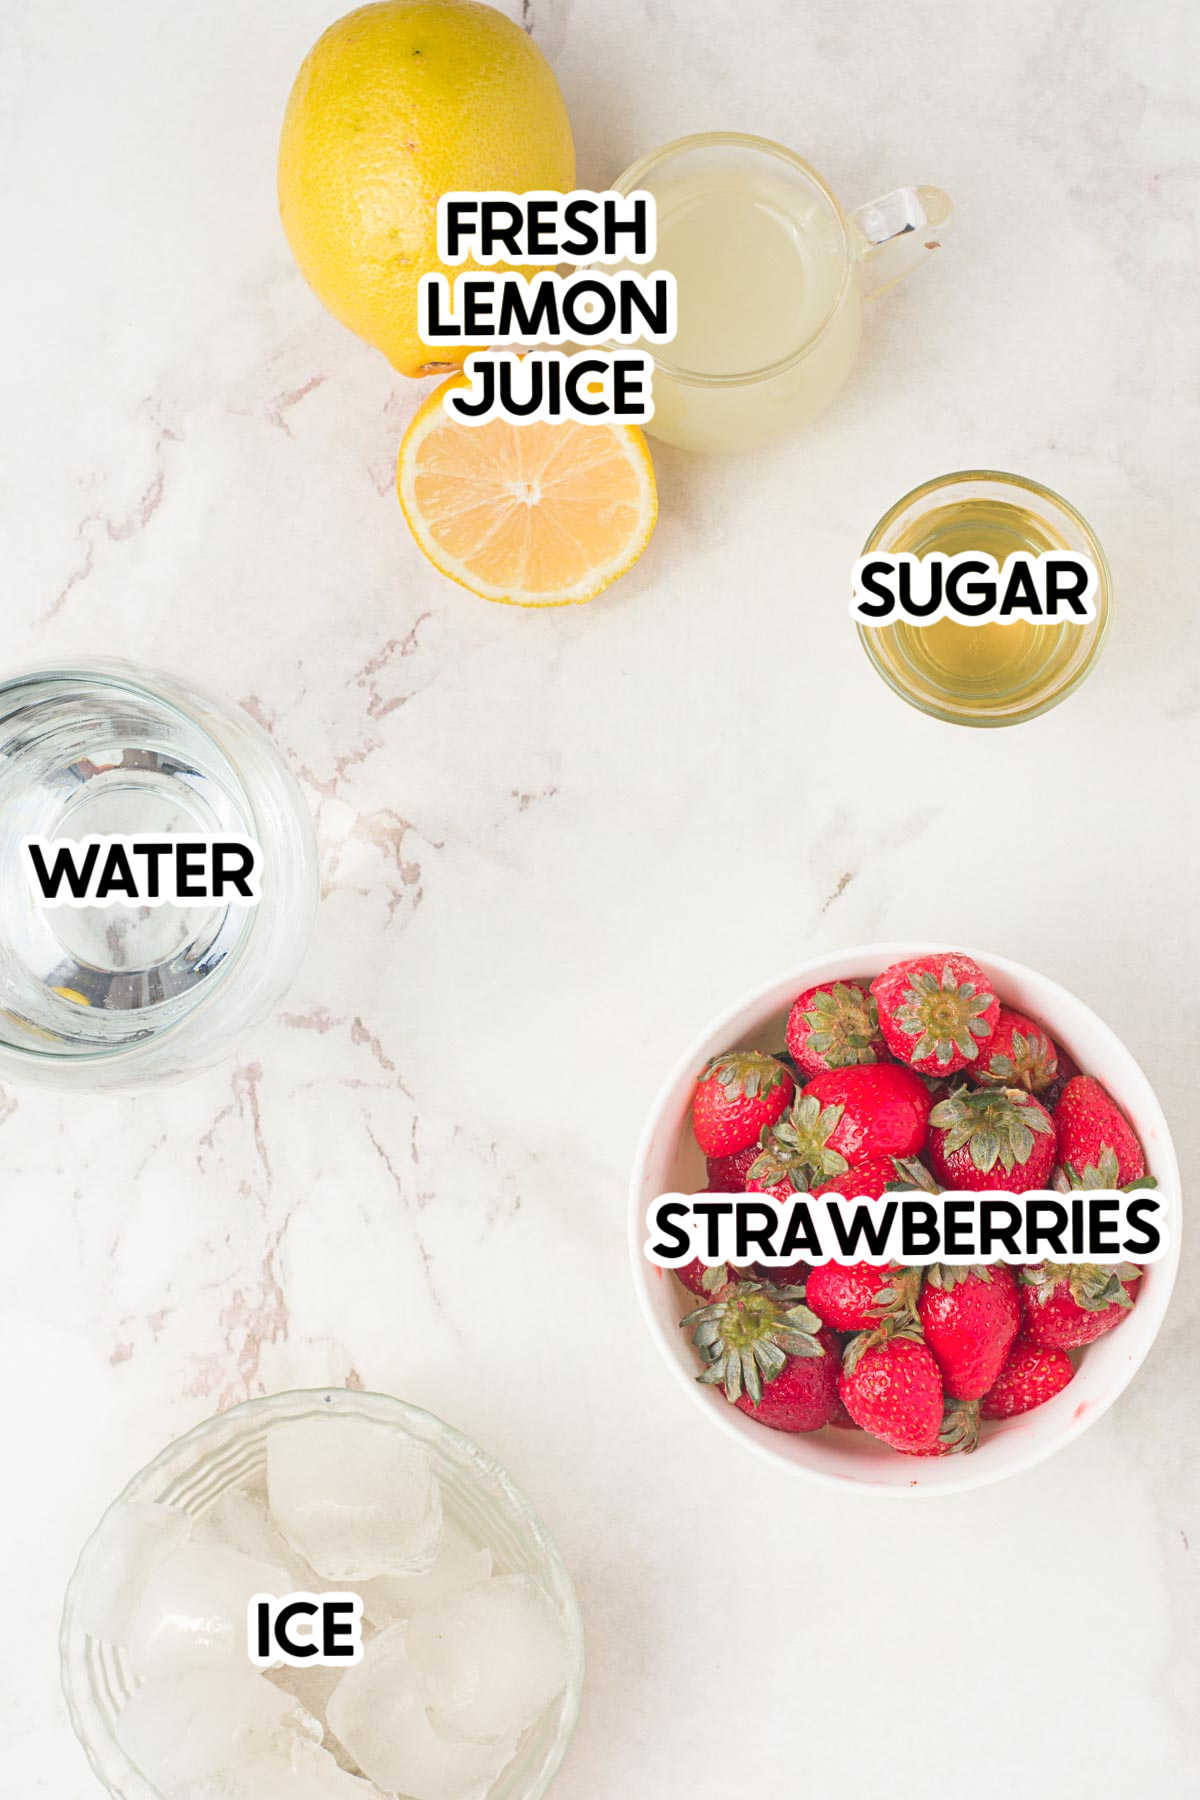 https://www.playpartyplan.com/wp-content/uploads/2021/07/homemade-strawberry-lemonade-ingredients.jpg